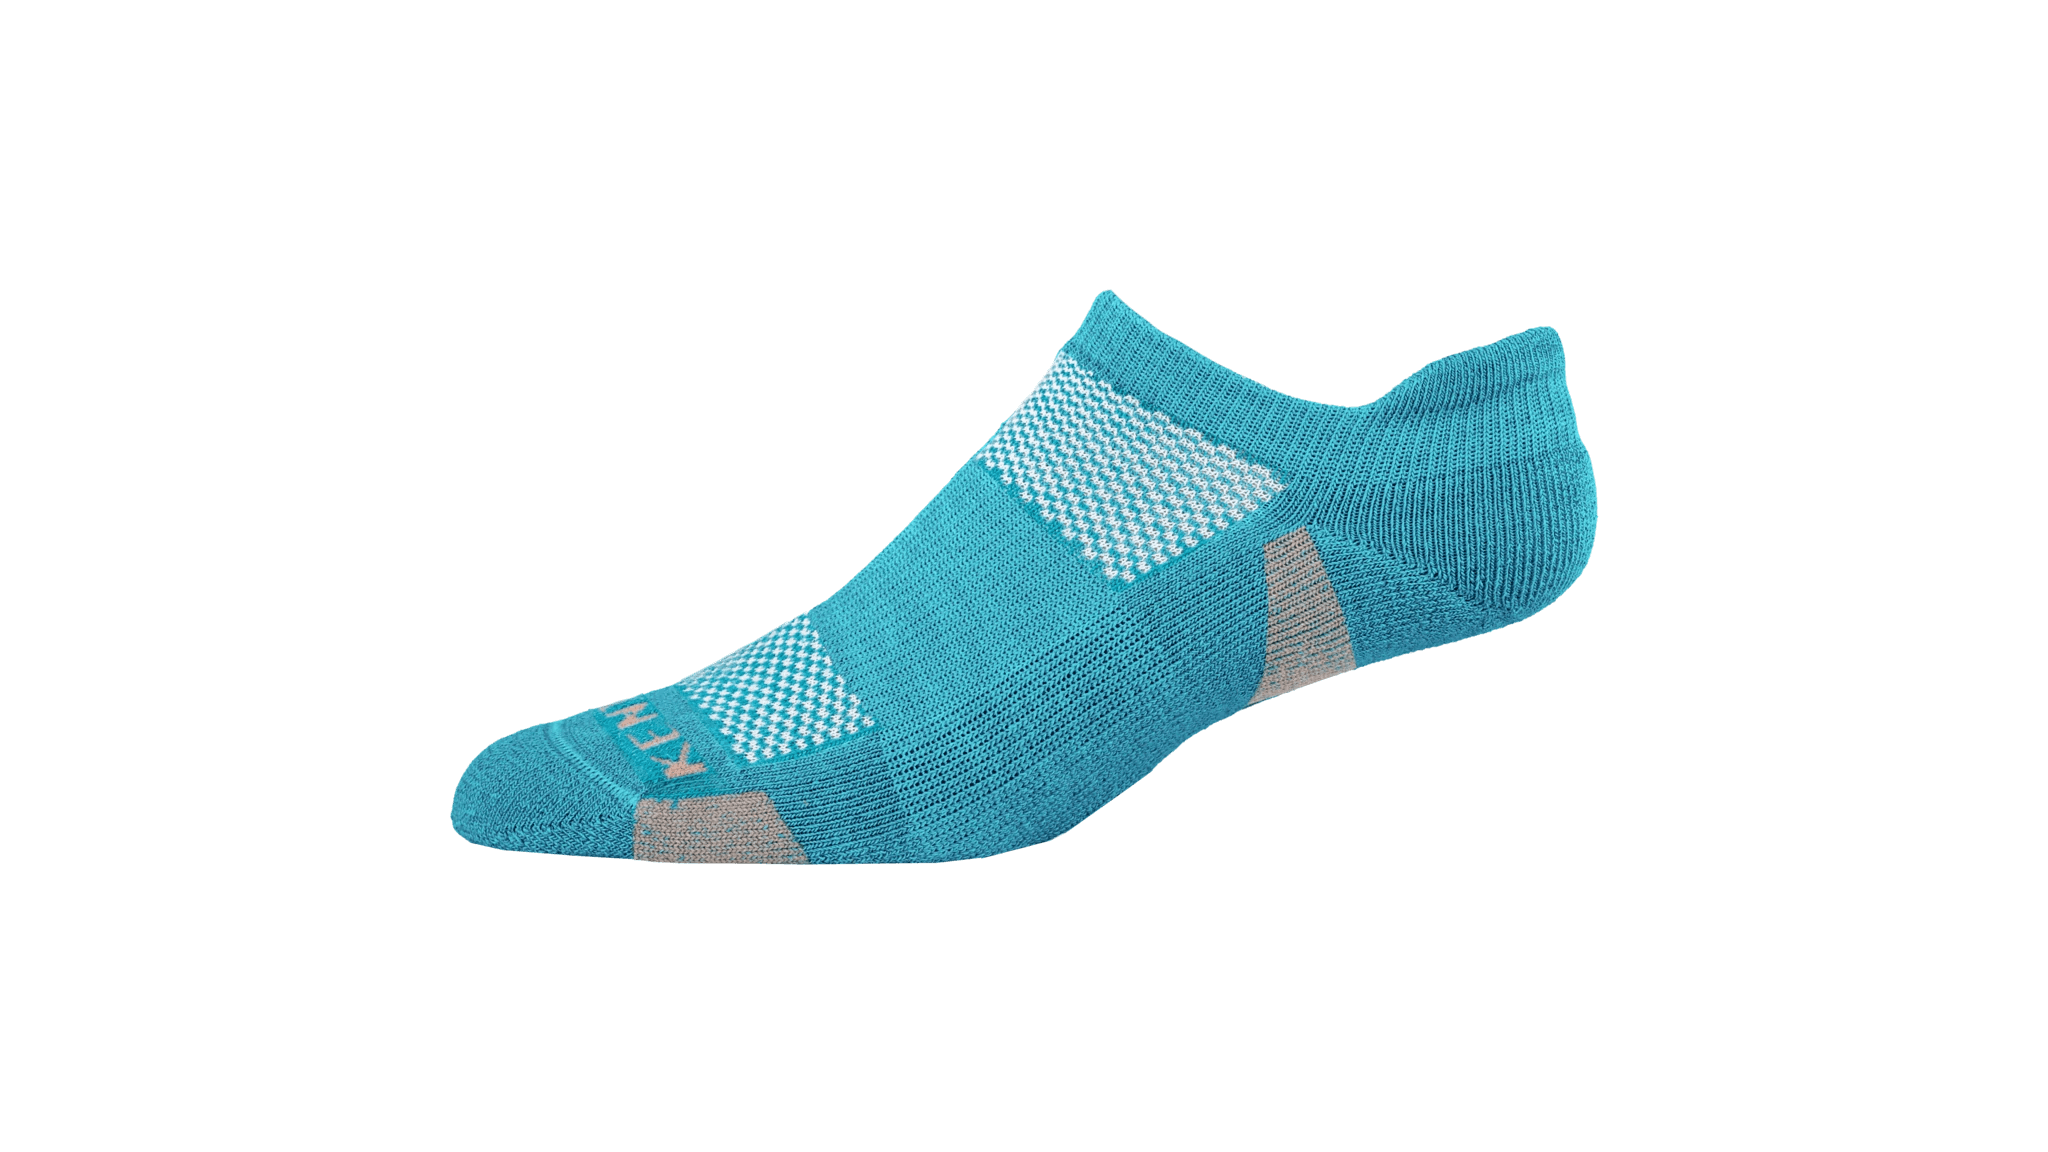 bluebell low socks from kentwool